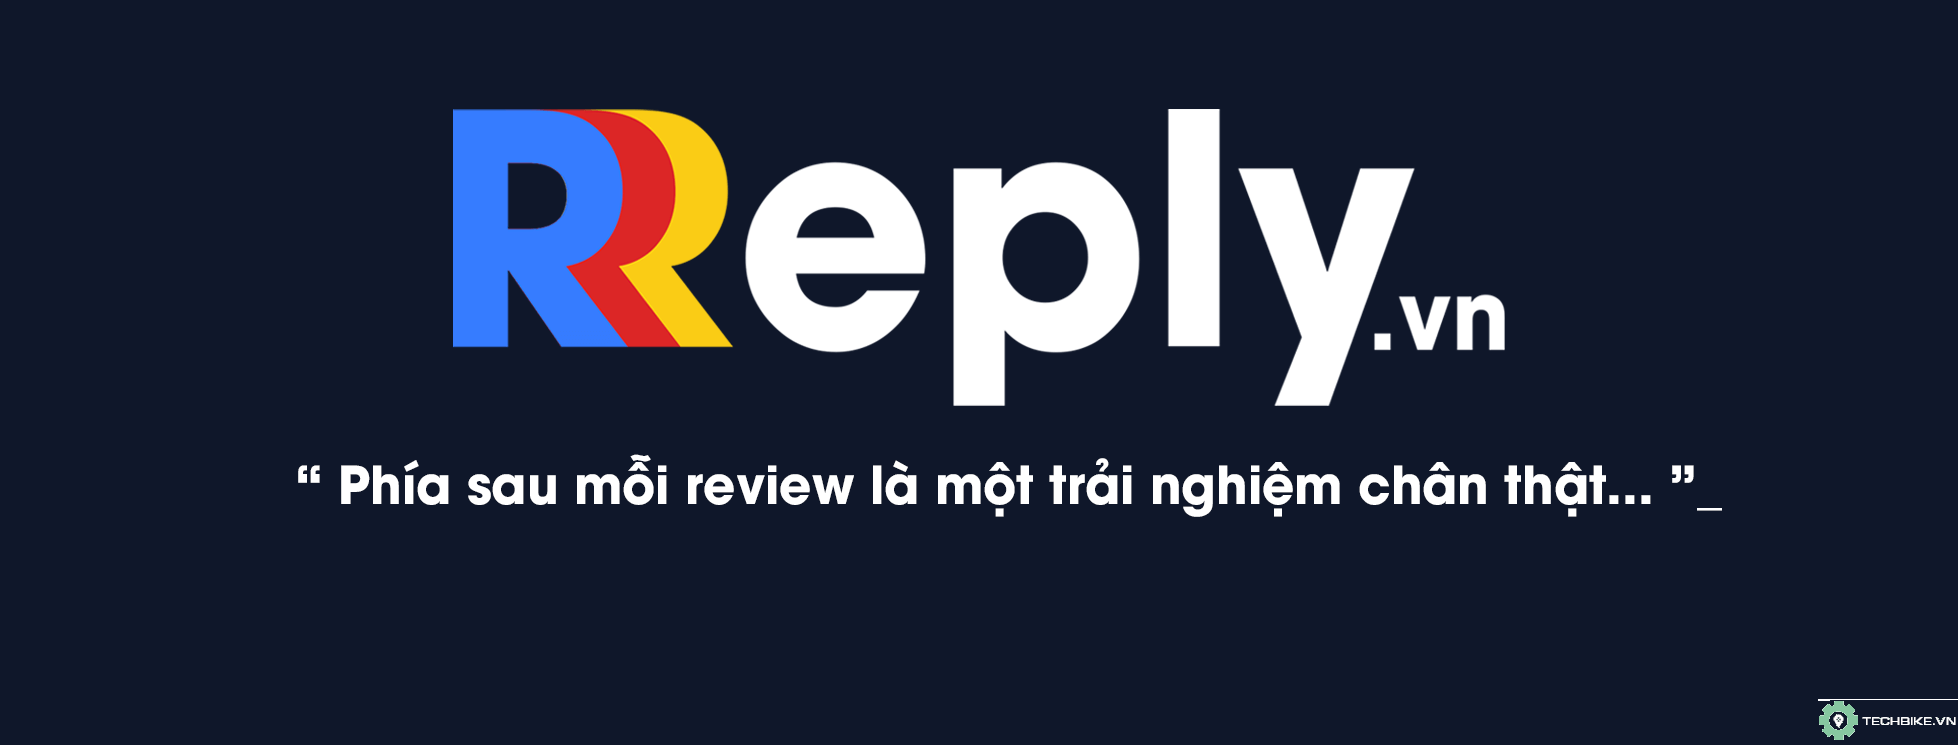 reply.vn - Cộng đồng review việt nam